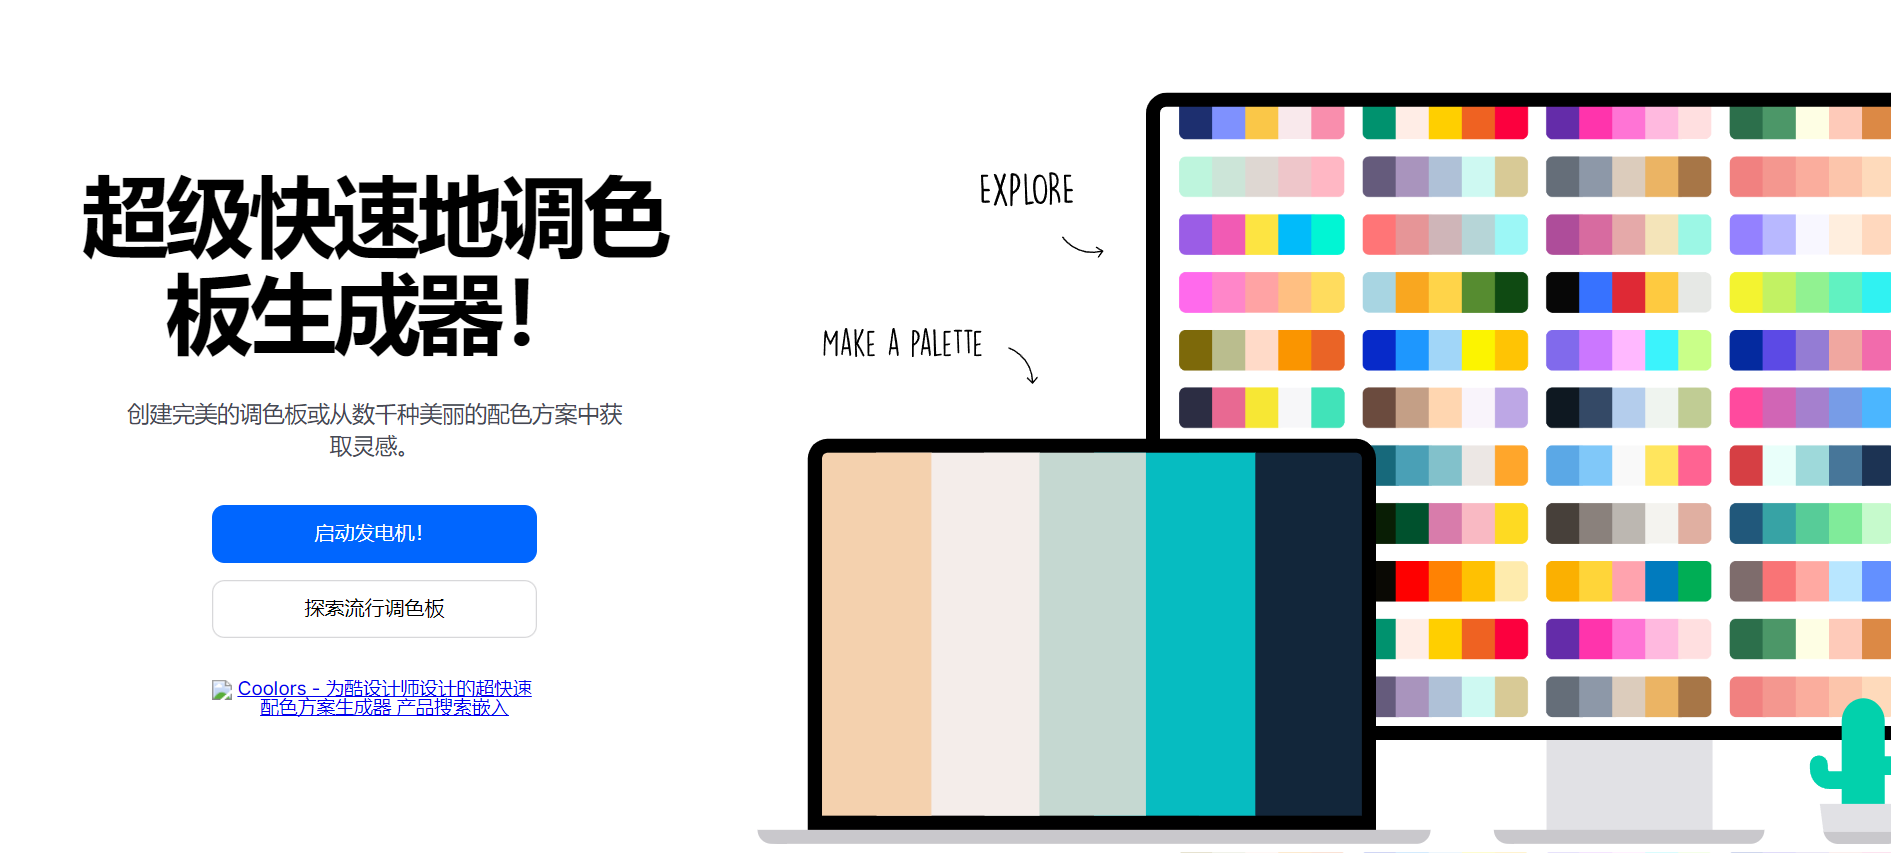 Adobe Illustrator (AI) 2019 的色板学习笔记 - 知乎